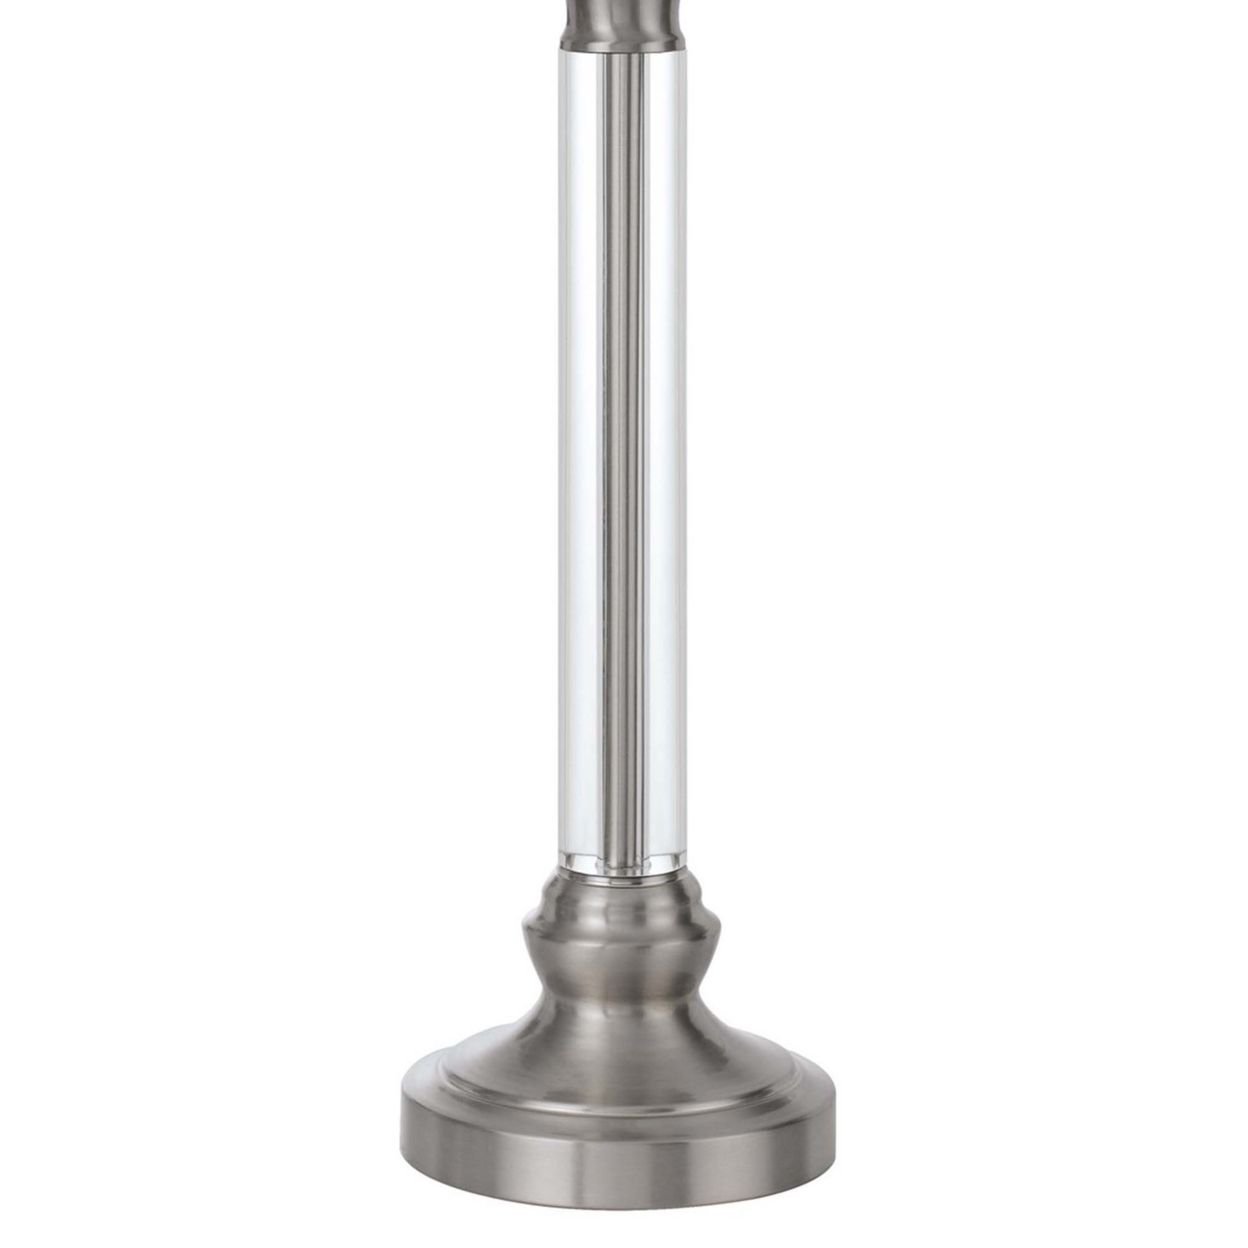 Table Lamp With Tubular Metal And Crystal Base, White And Silver- Saltoro Sherpi